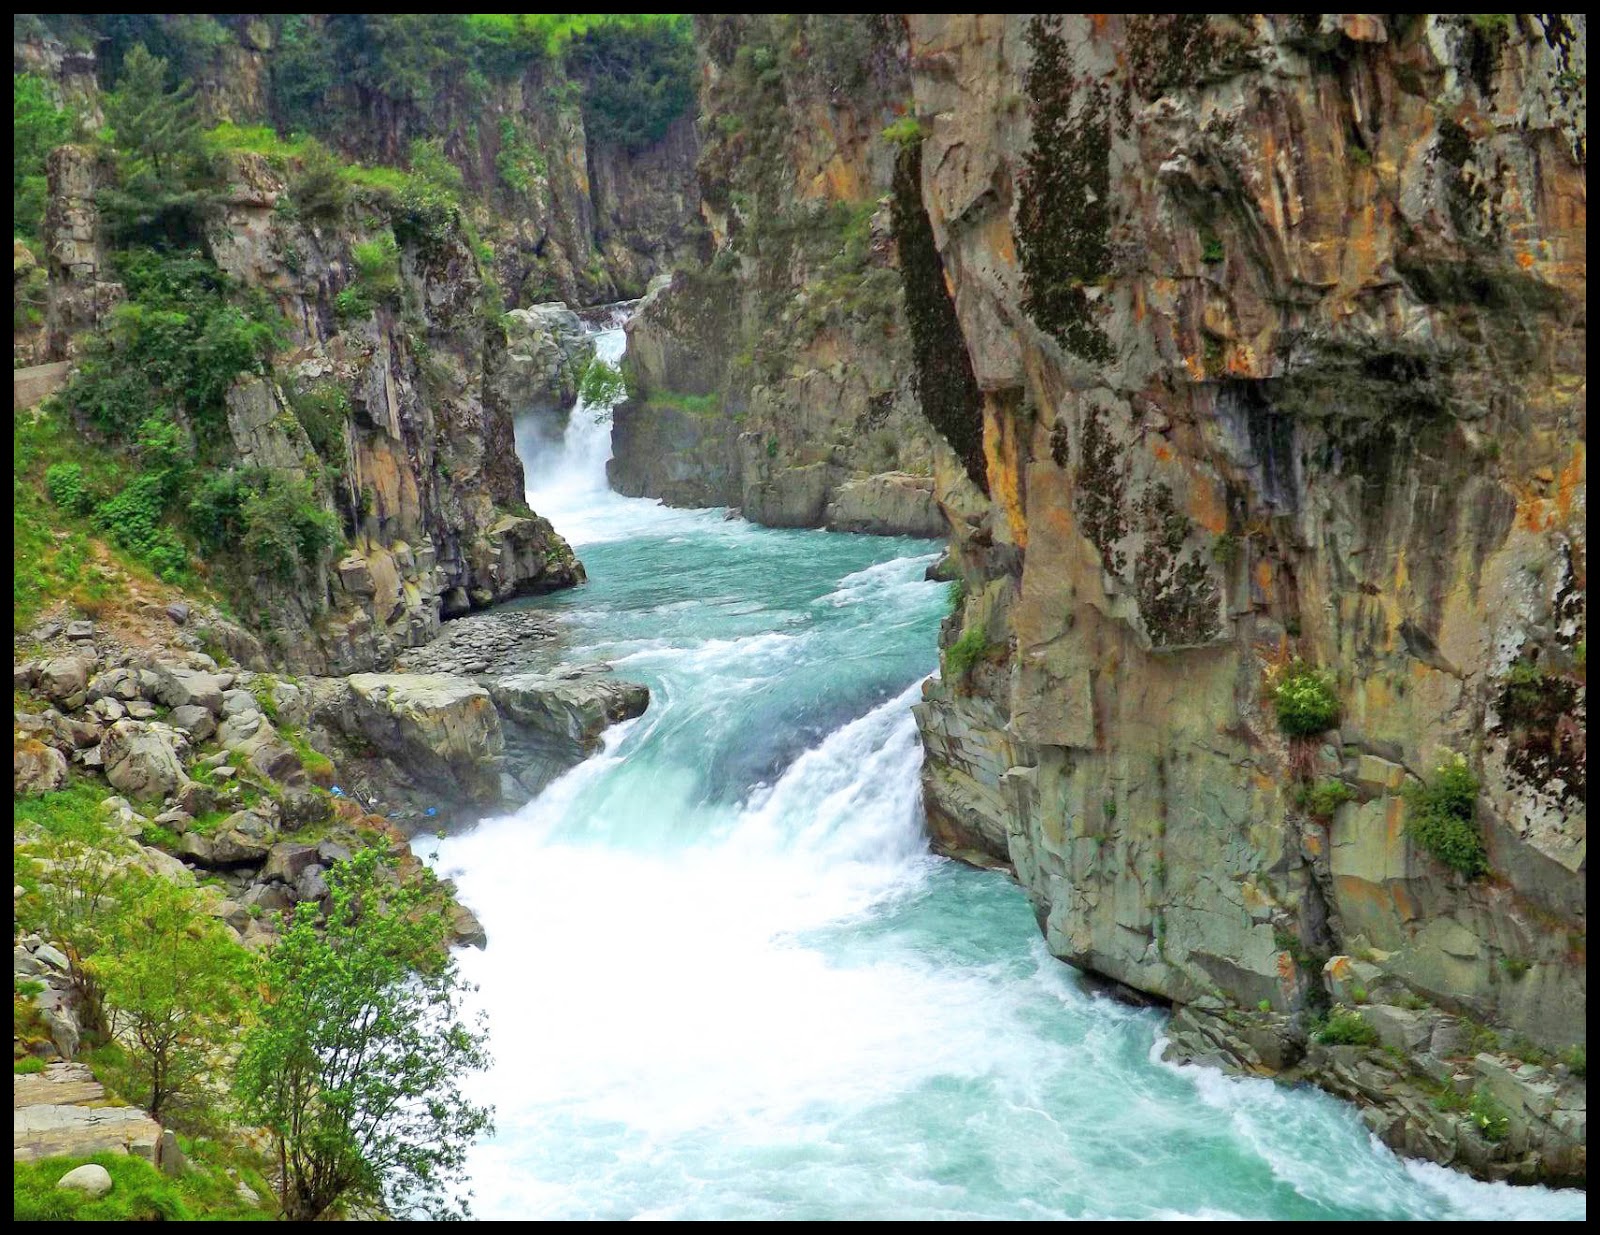 Aharbal,Jammu and Kashmir,India | Travel life journeys